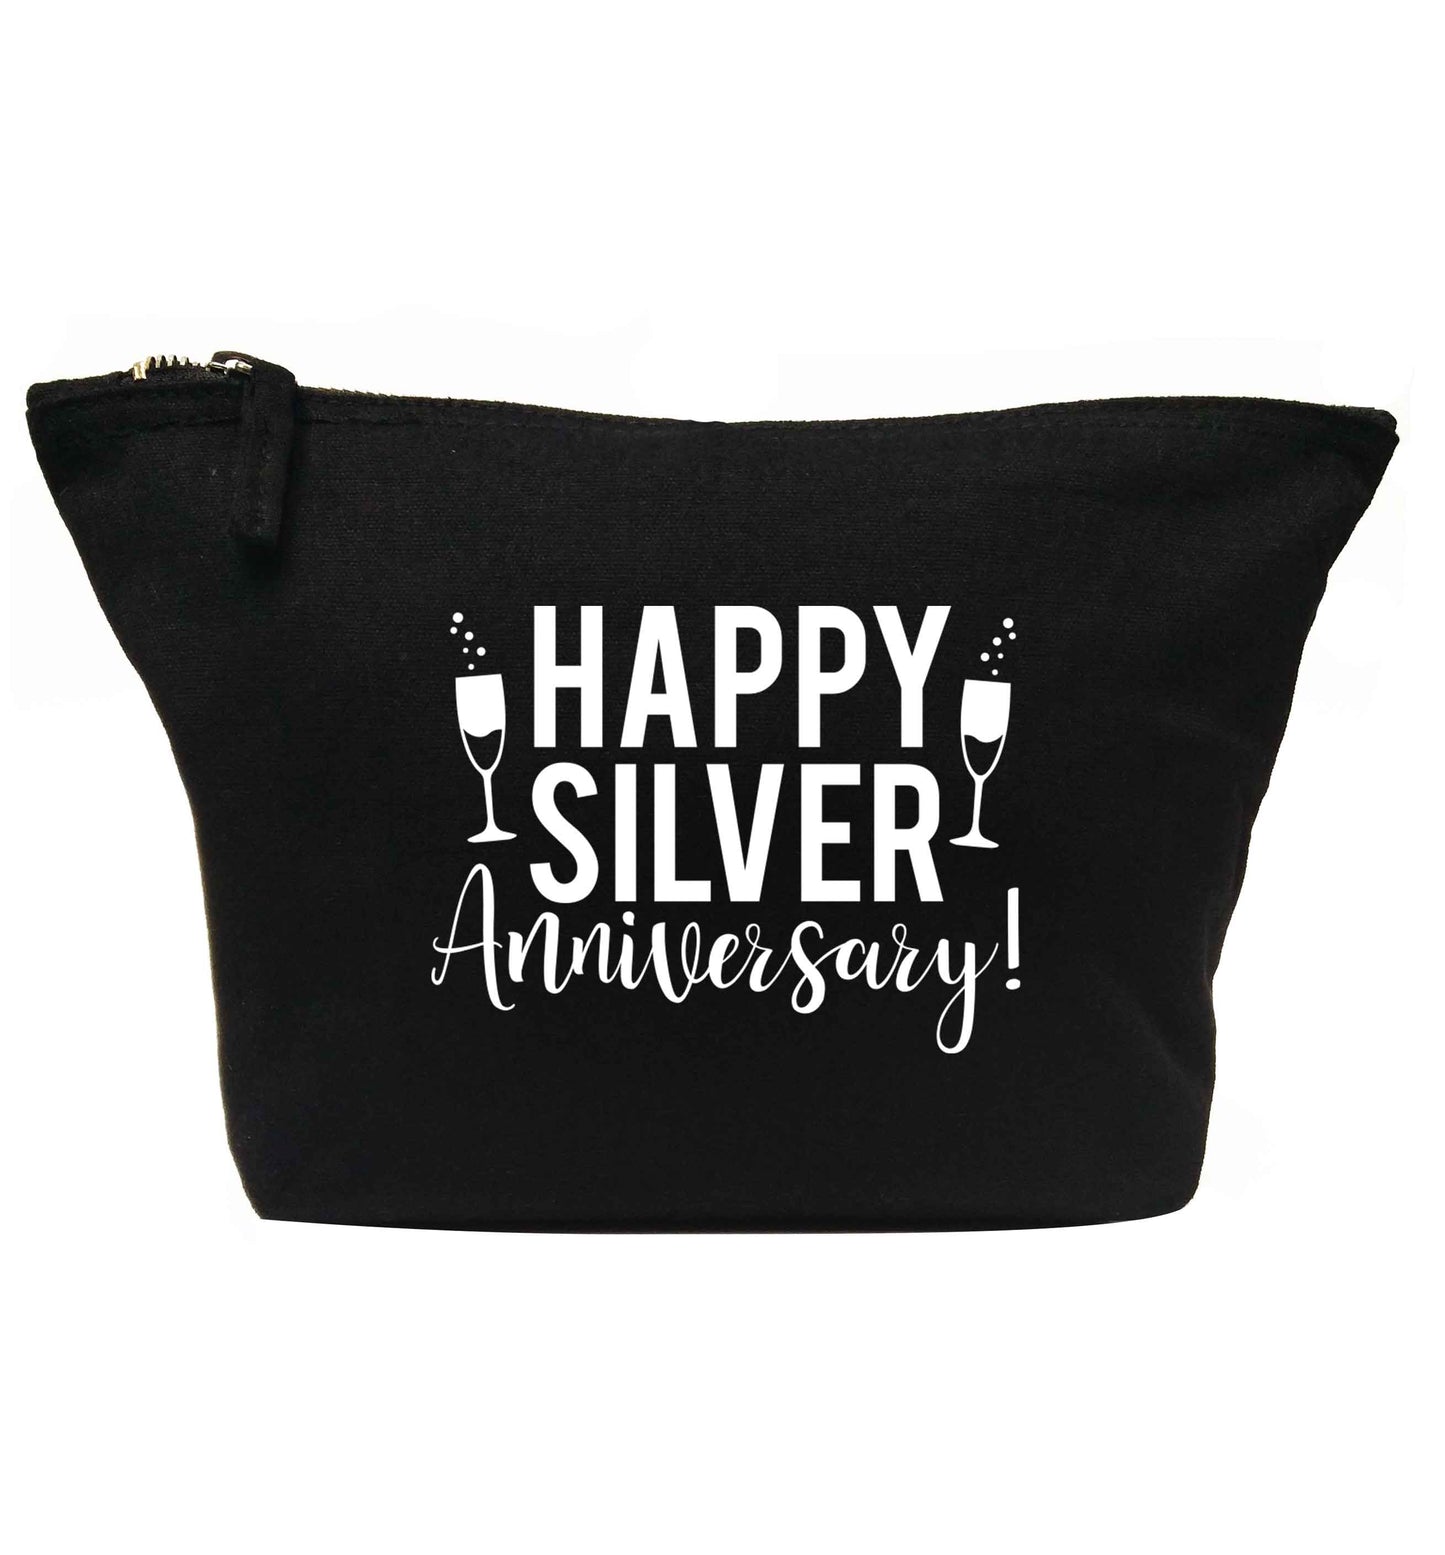 Happy silver anniversary! | Makeup / wash bag